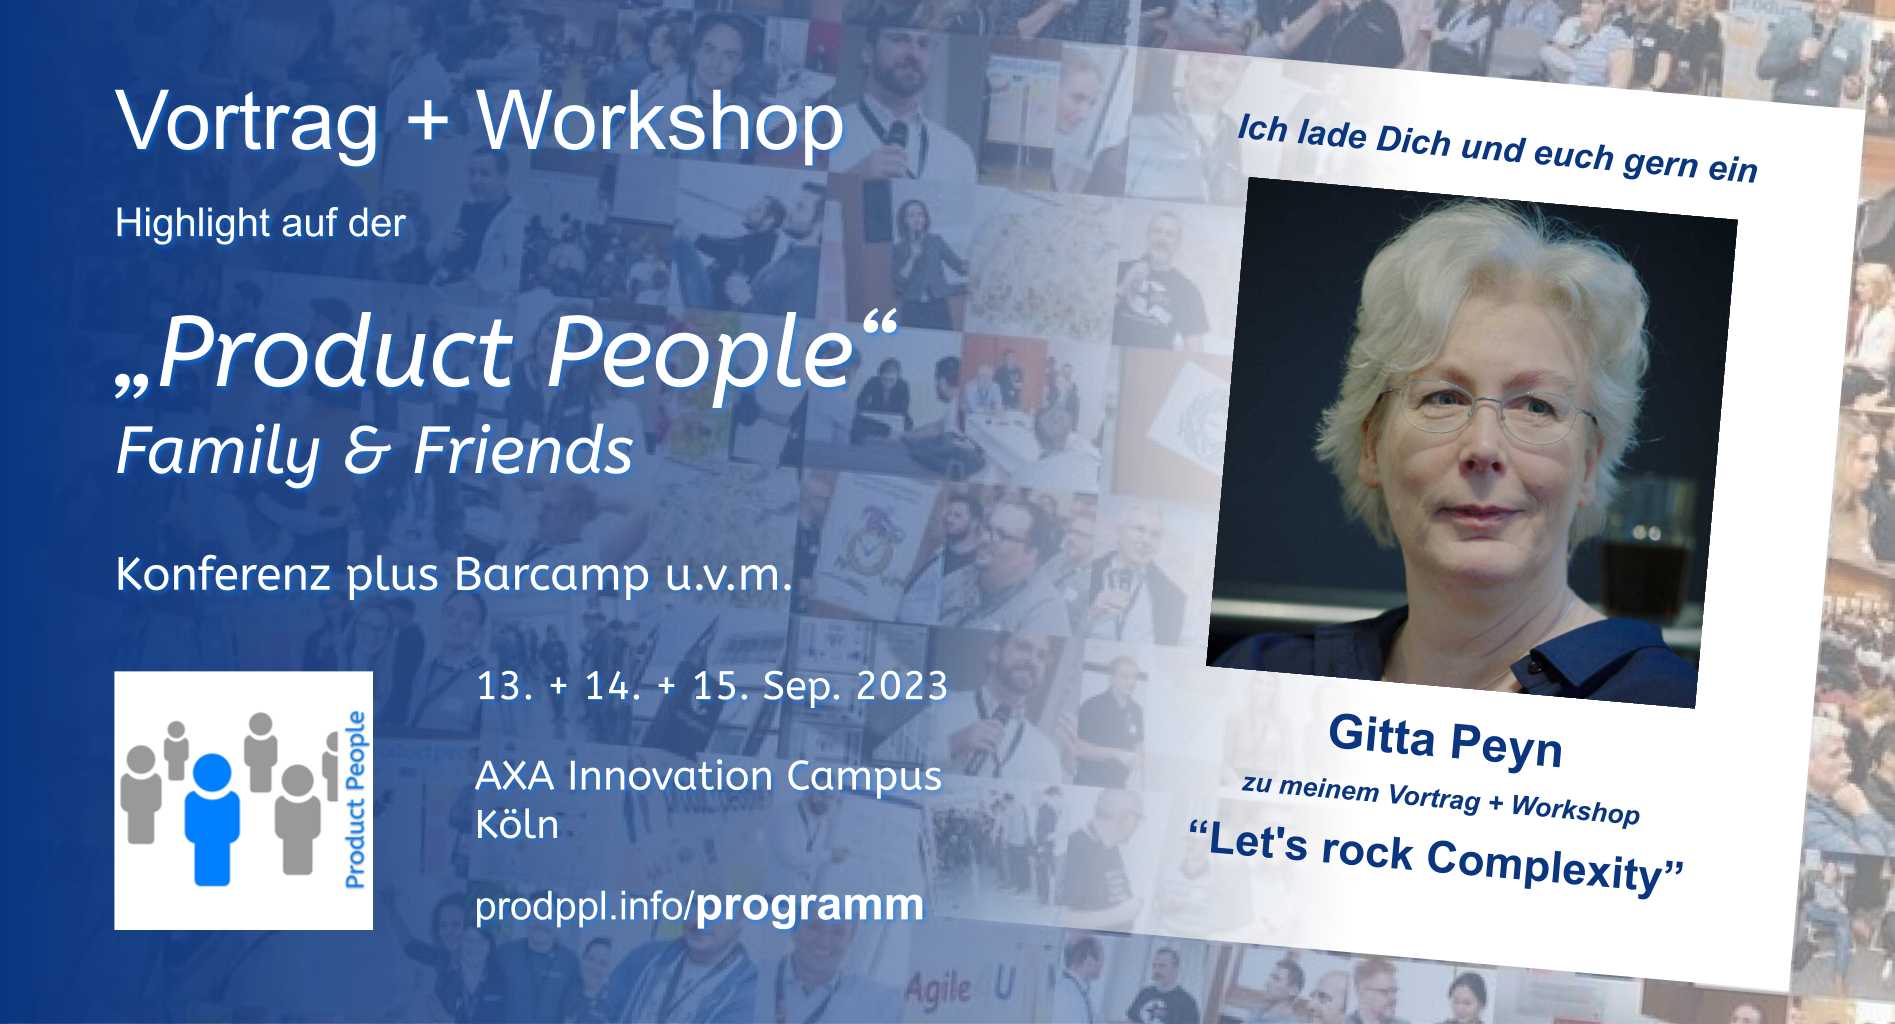 Vortrag + Workshop - "Let's rock Complexity" - Gitta Peyn - "Product People - Family & Friends" - Konferenz plus Barcamp - Köln 2023